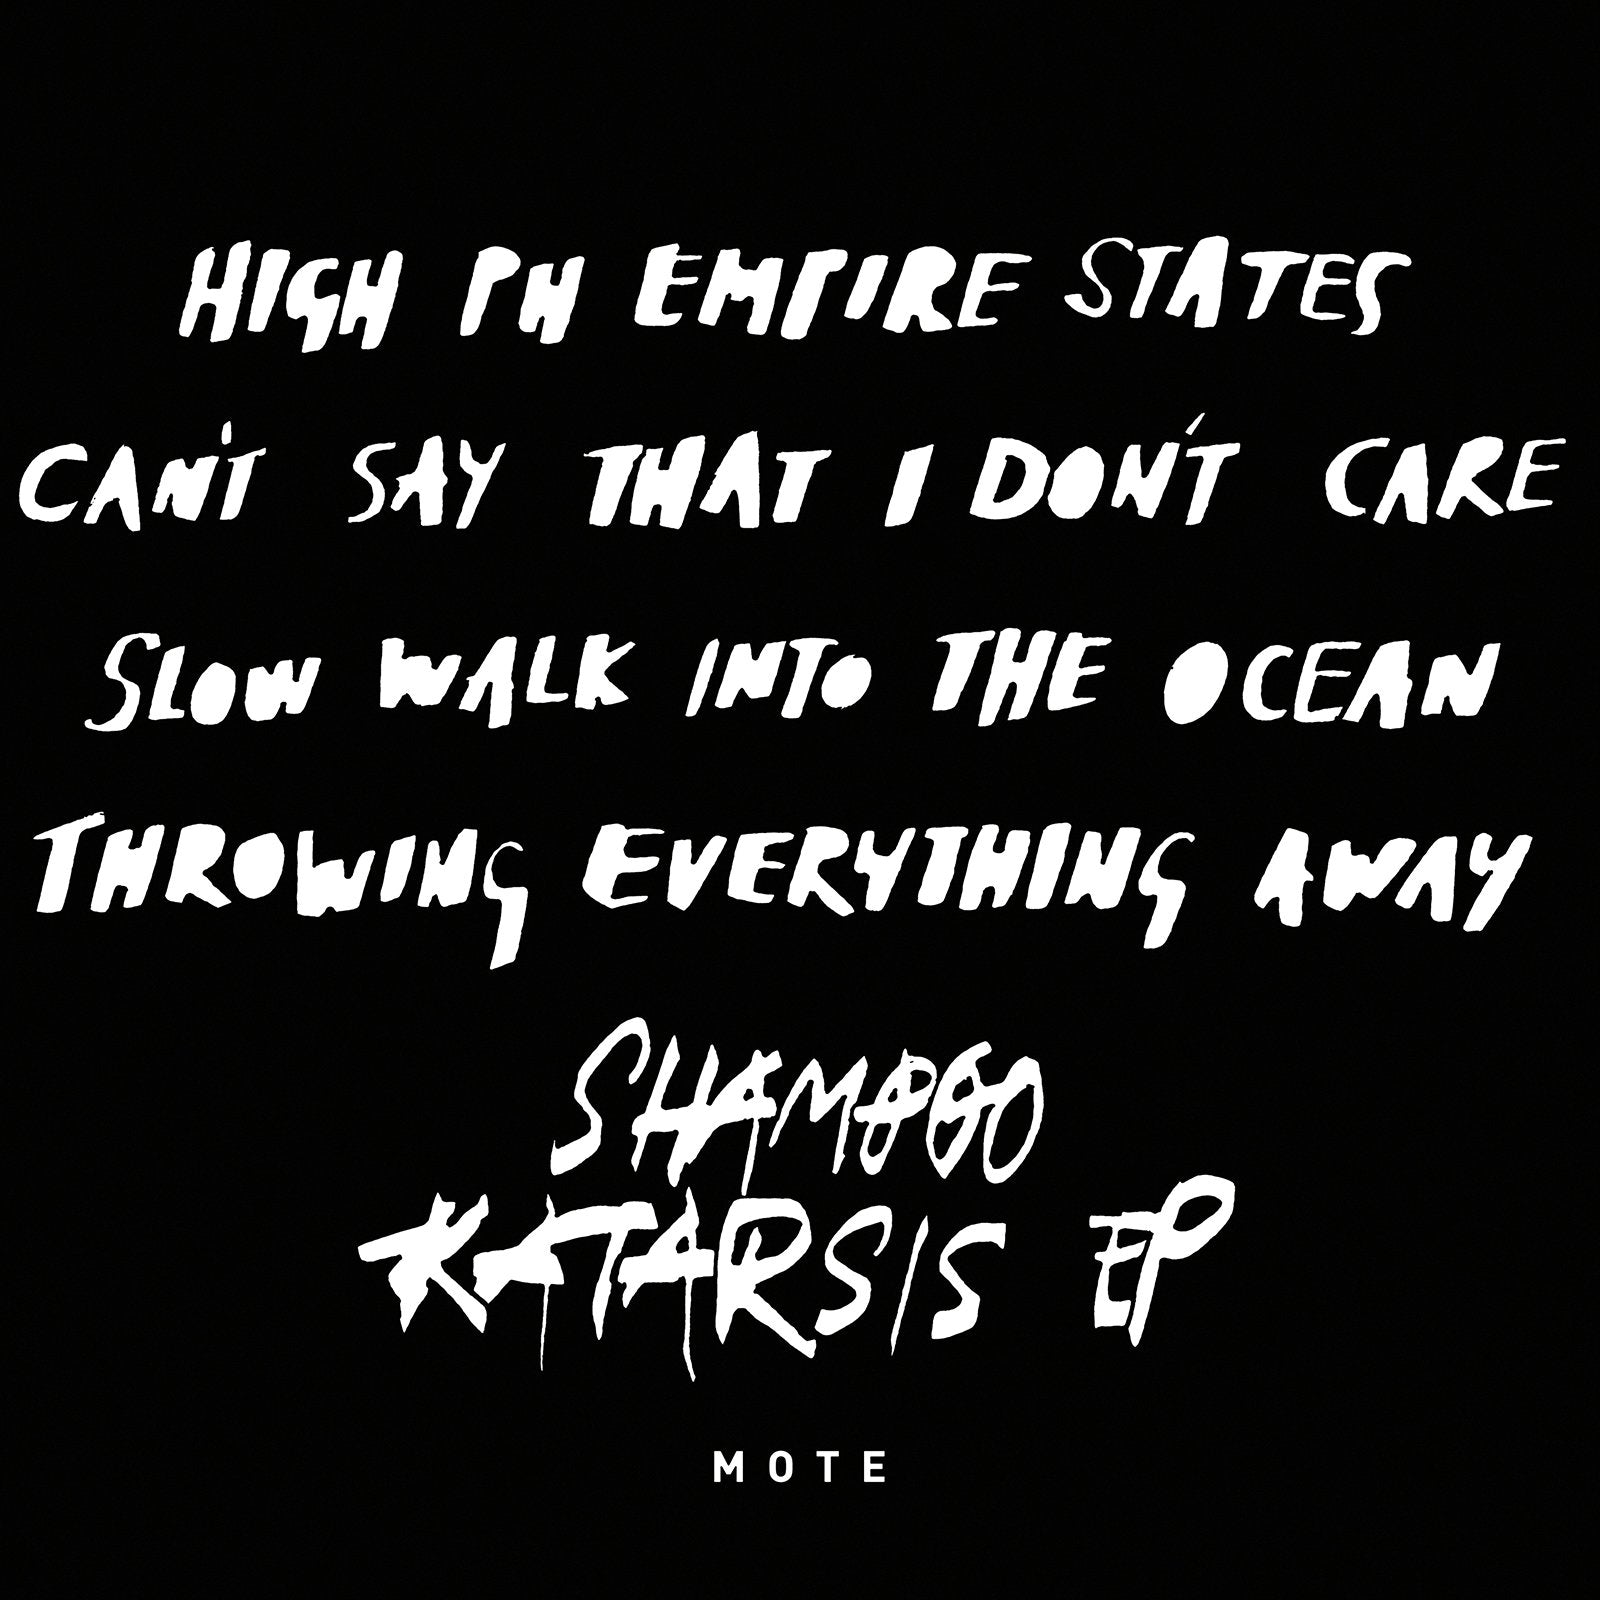 Shampoo 'Katarsis EP' 12"